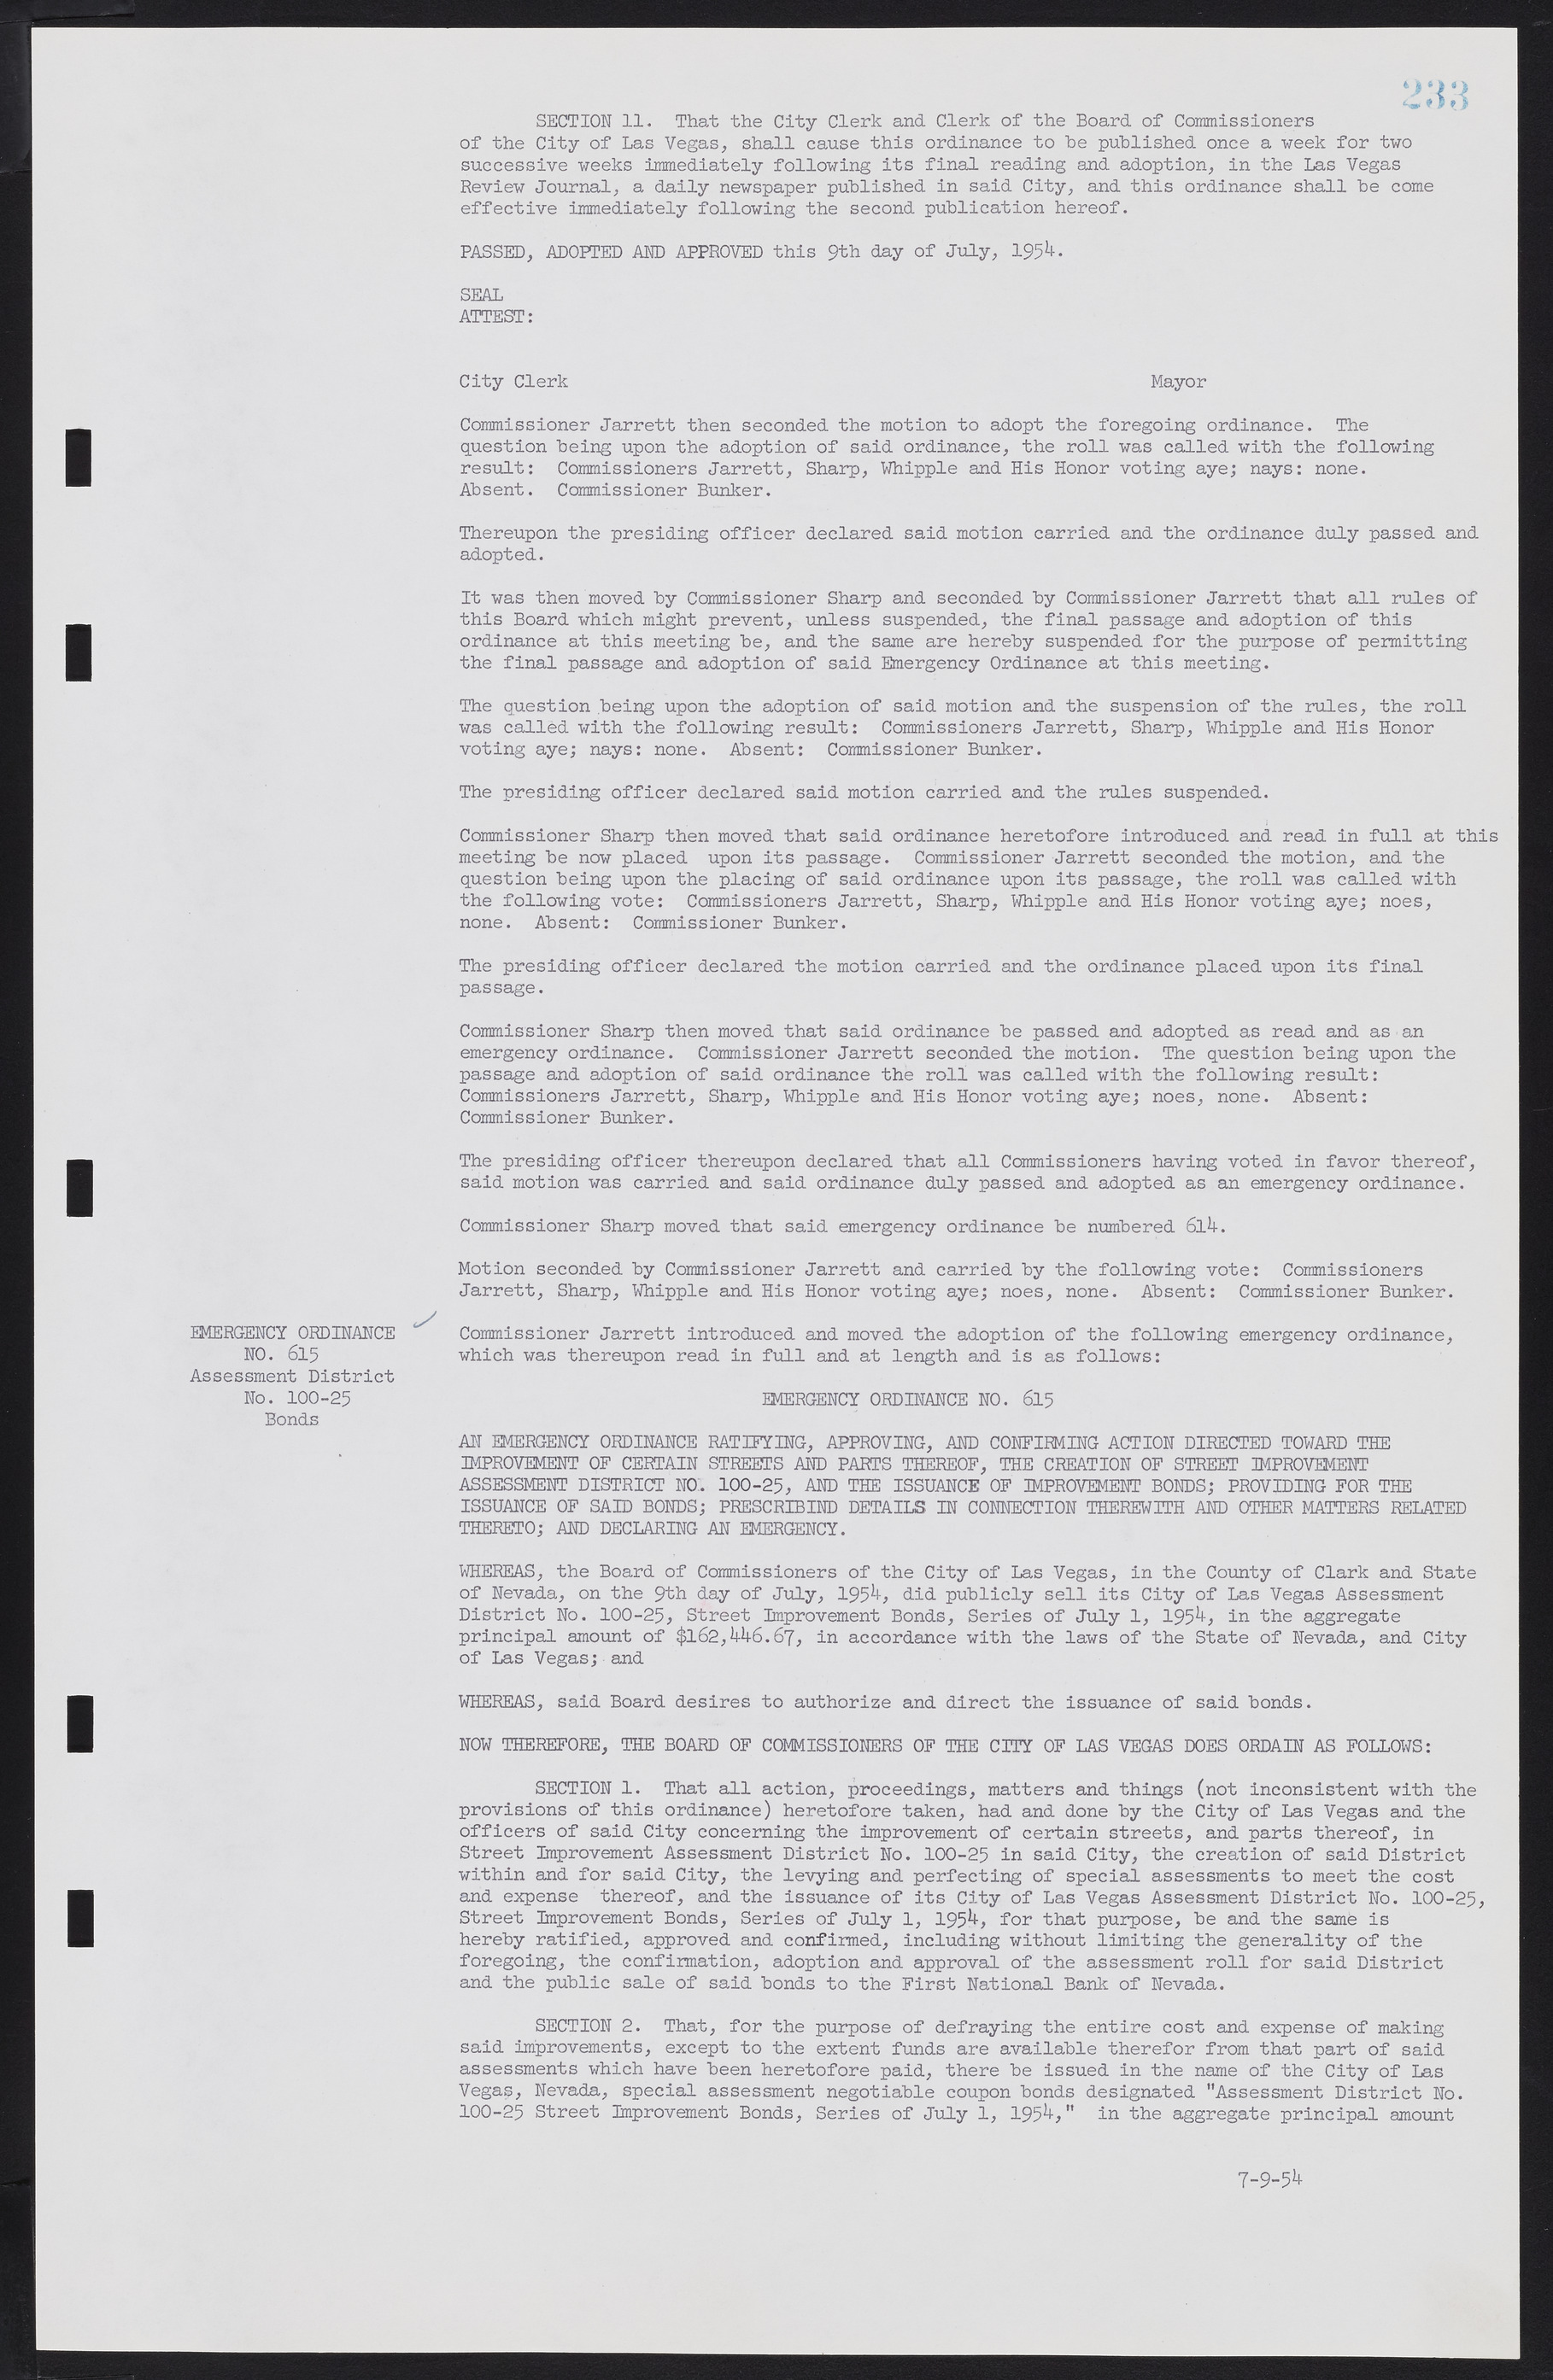 Las Vegas City Commission Minutes, February 17, 1954 to September 21, 1955, lvc000009-239